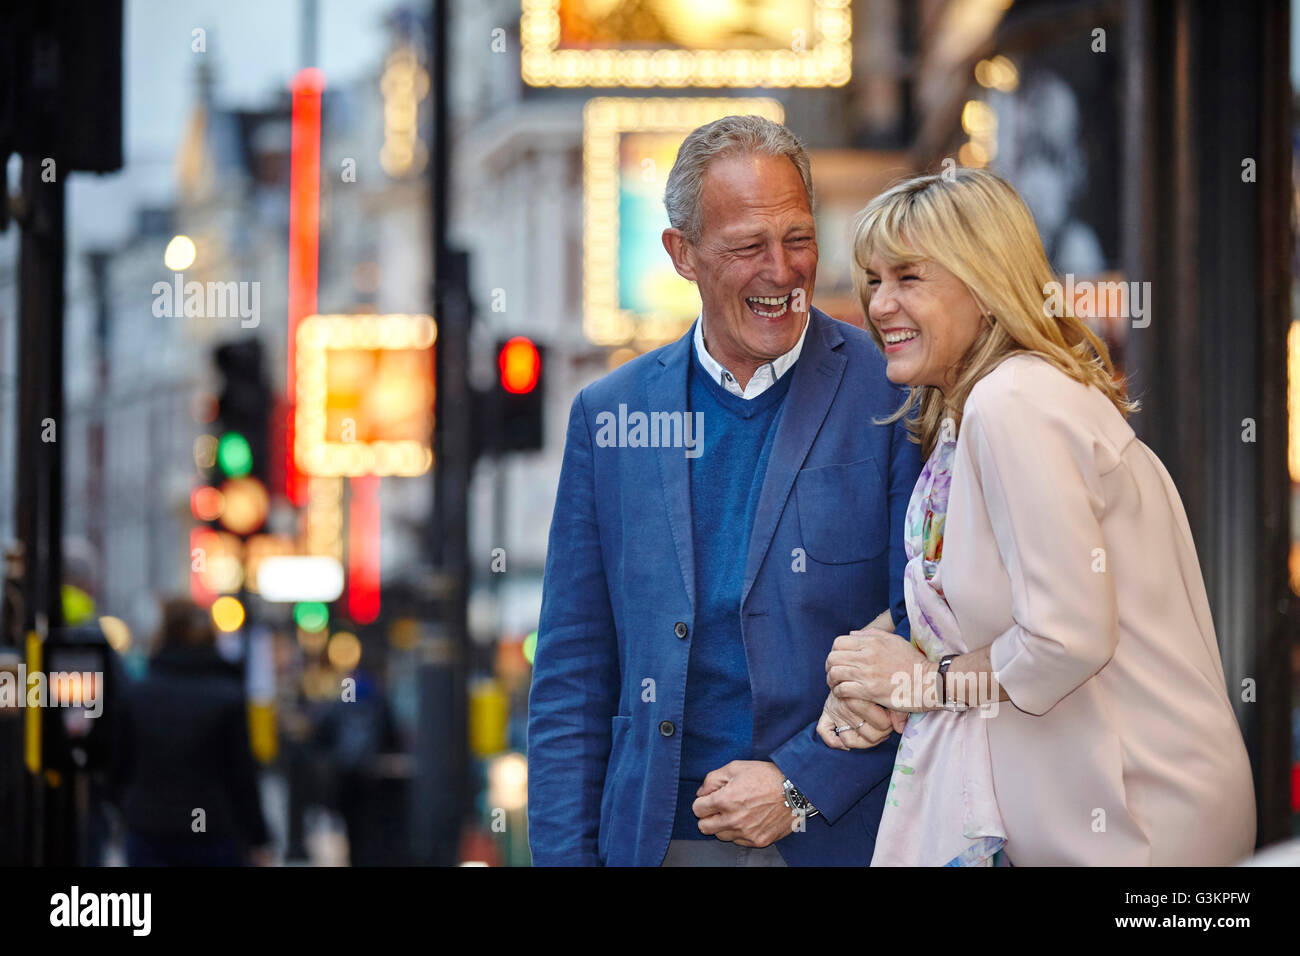 Mature dating couple giggling on city street at dusk, London, UK Stock Photo